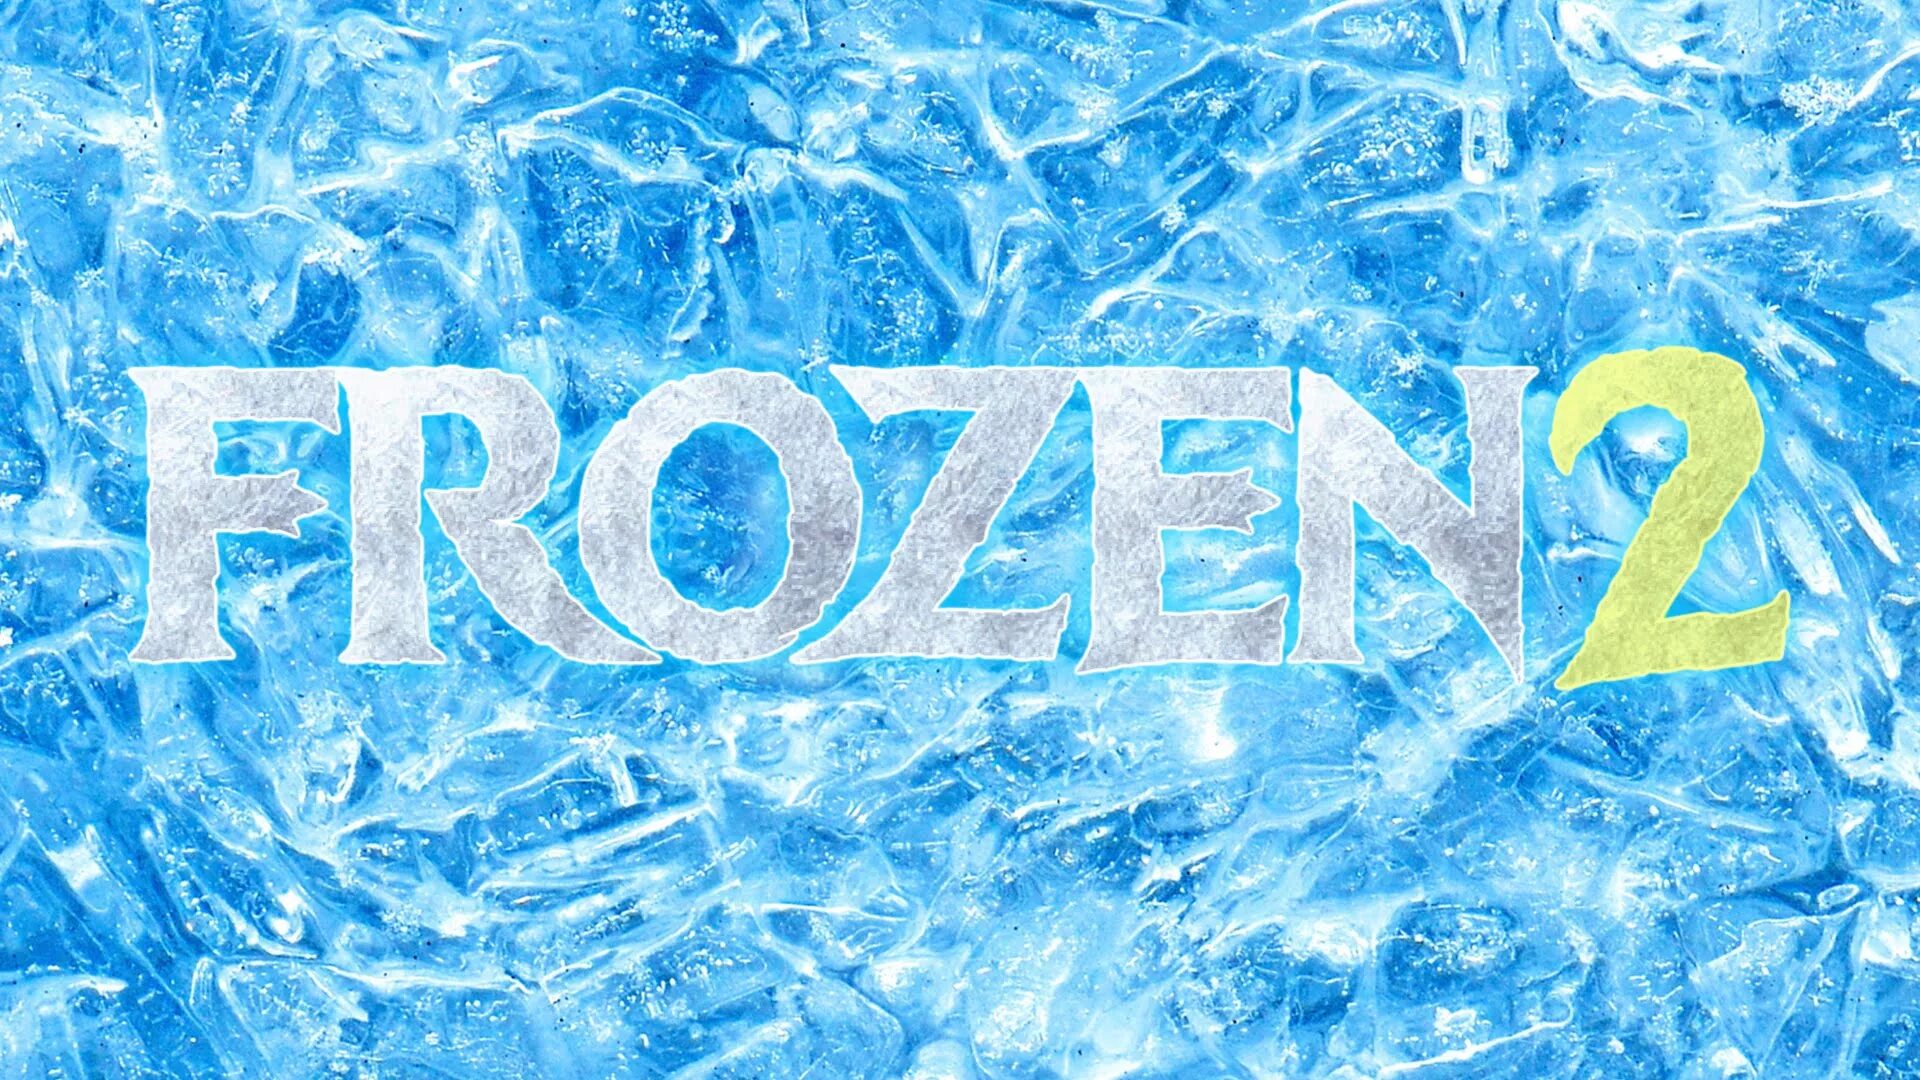 Freeze video. Frozen 2. Frozen фон. Frozen надпись.